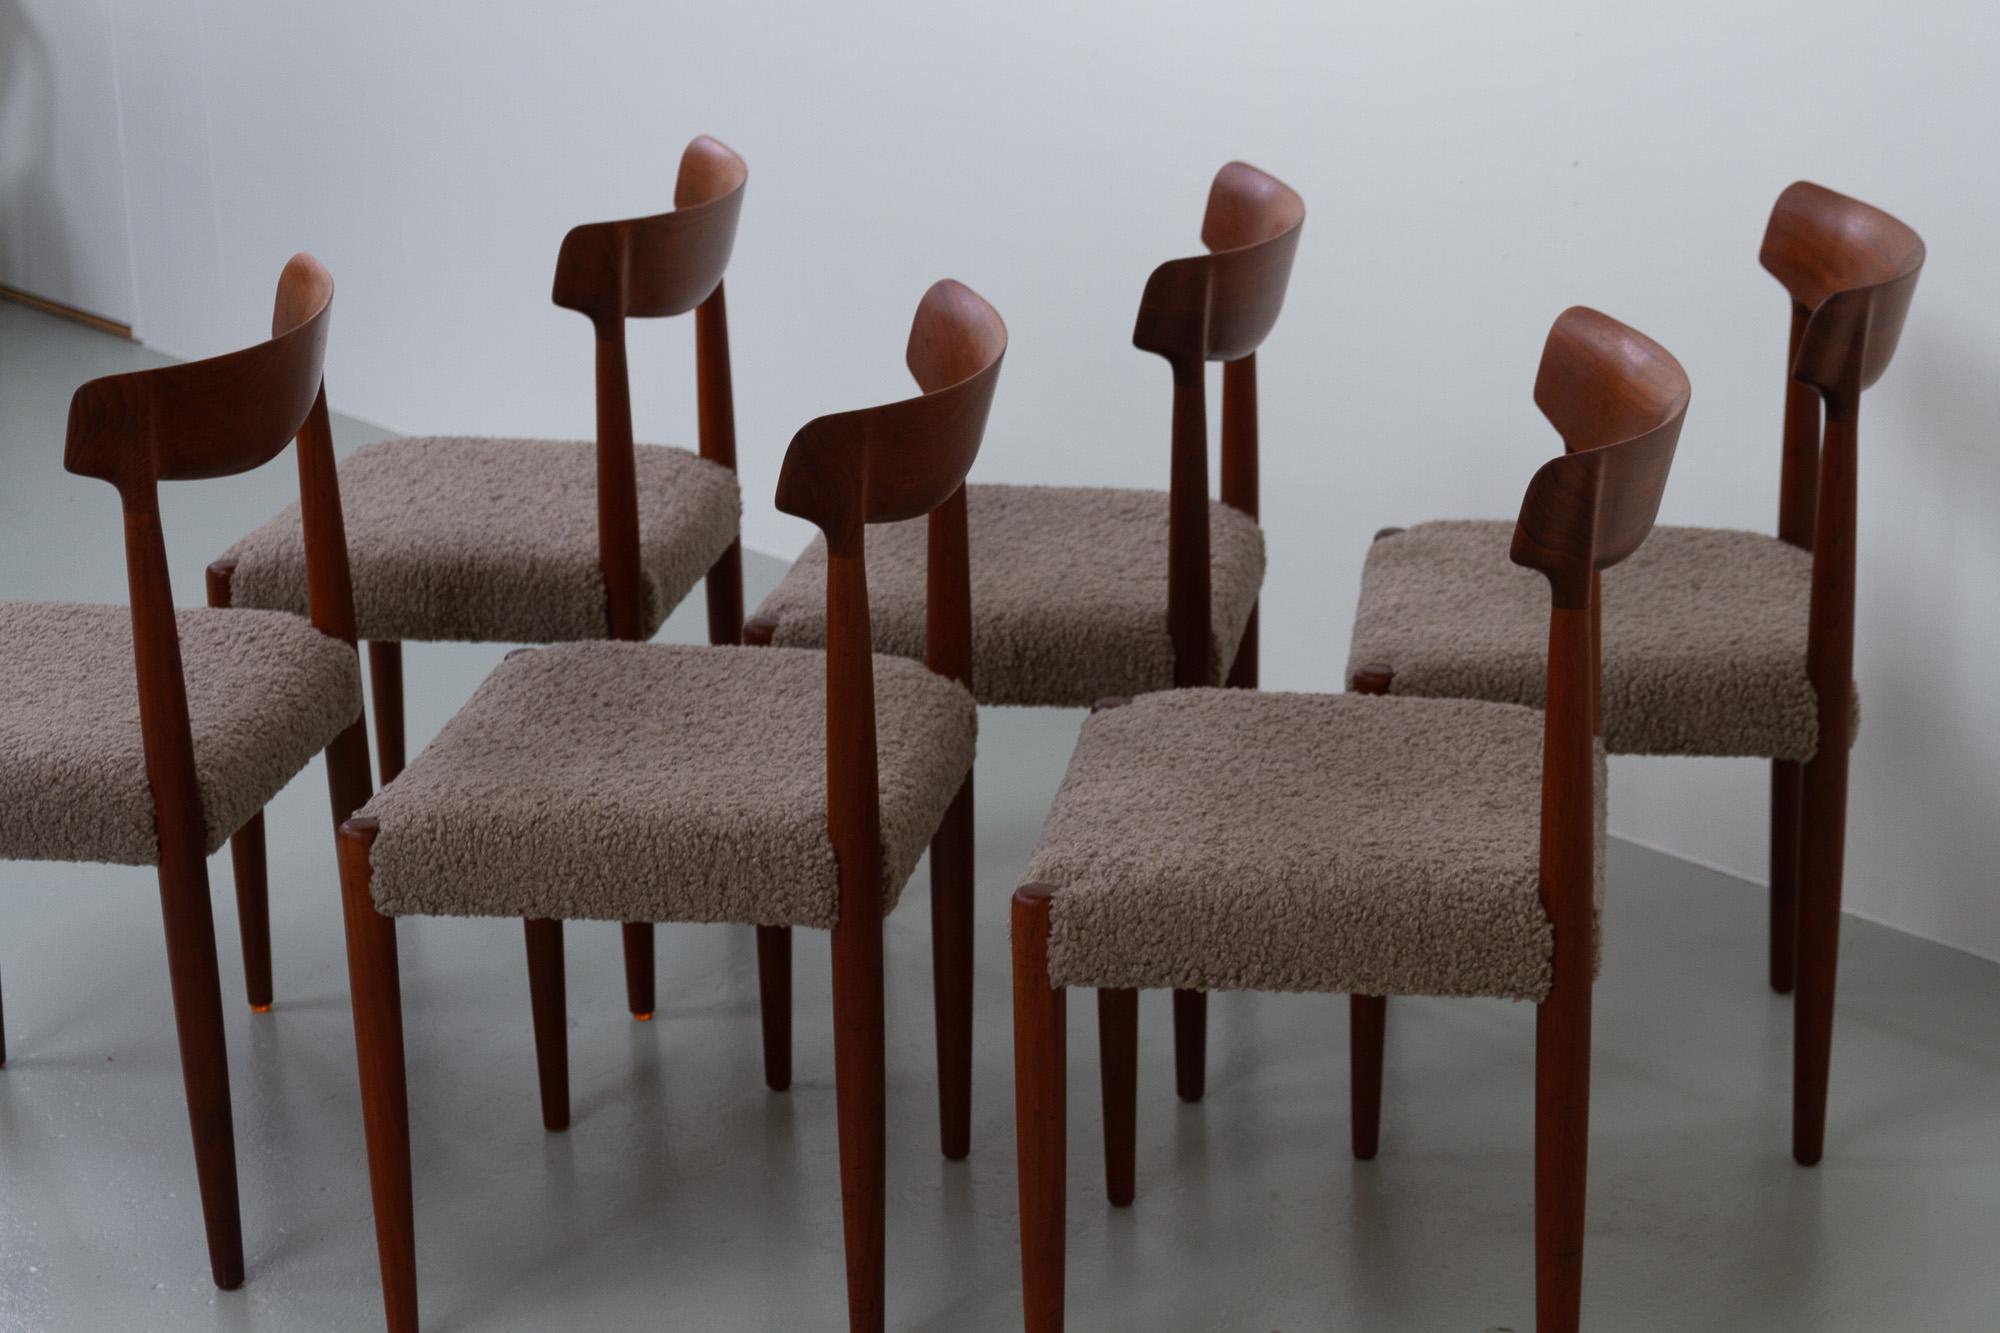 danish modern dining chairs